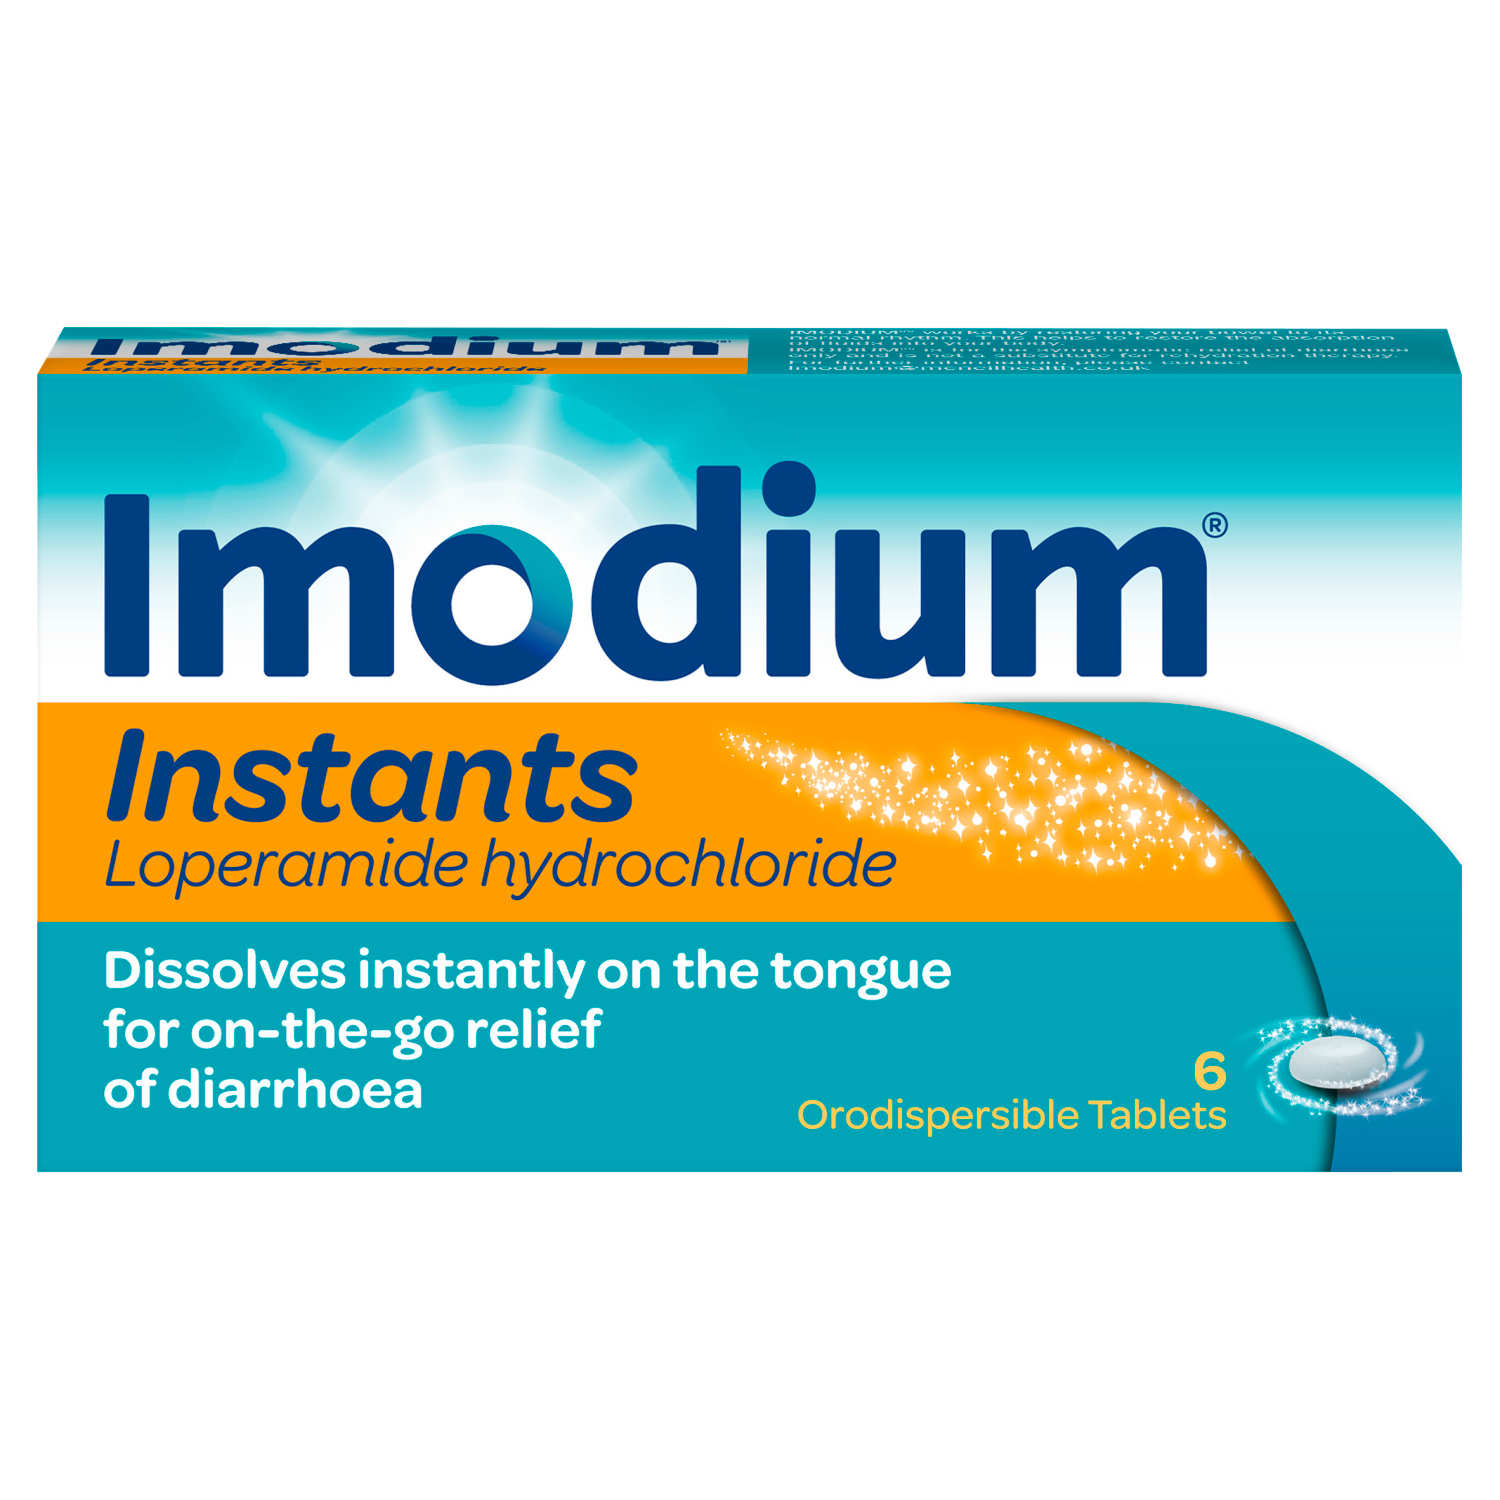 Imodium Instants (6 Tablets)